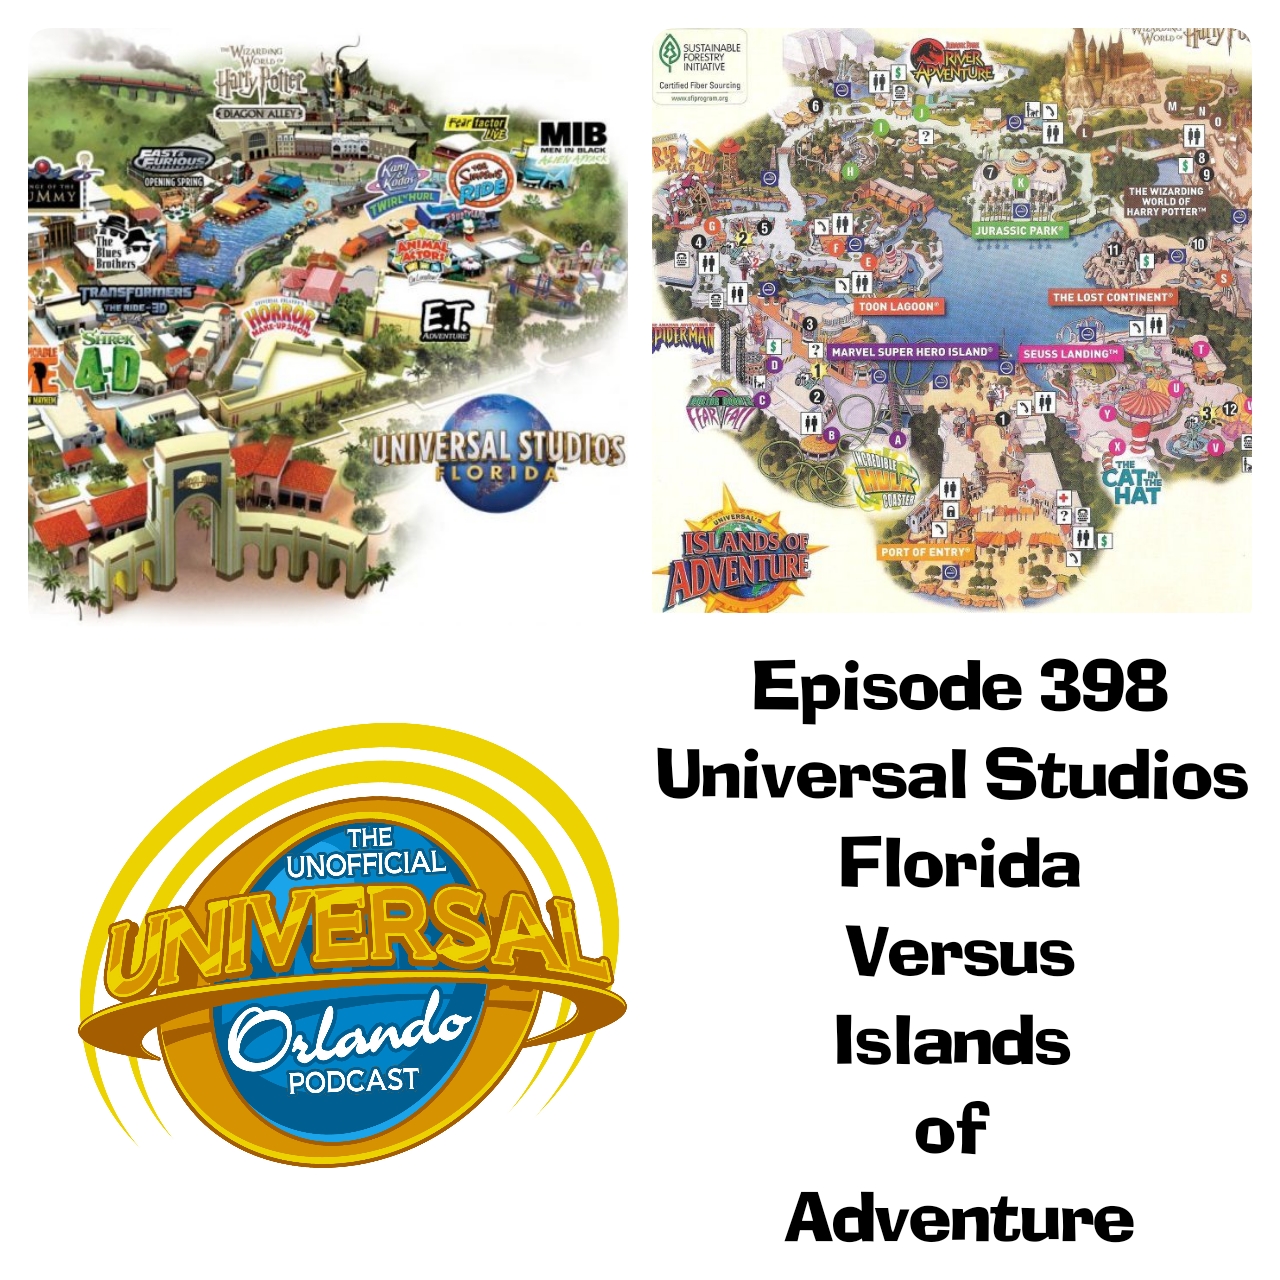 Universal Studios vs Islands of Adventure - Which Is Better